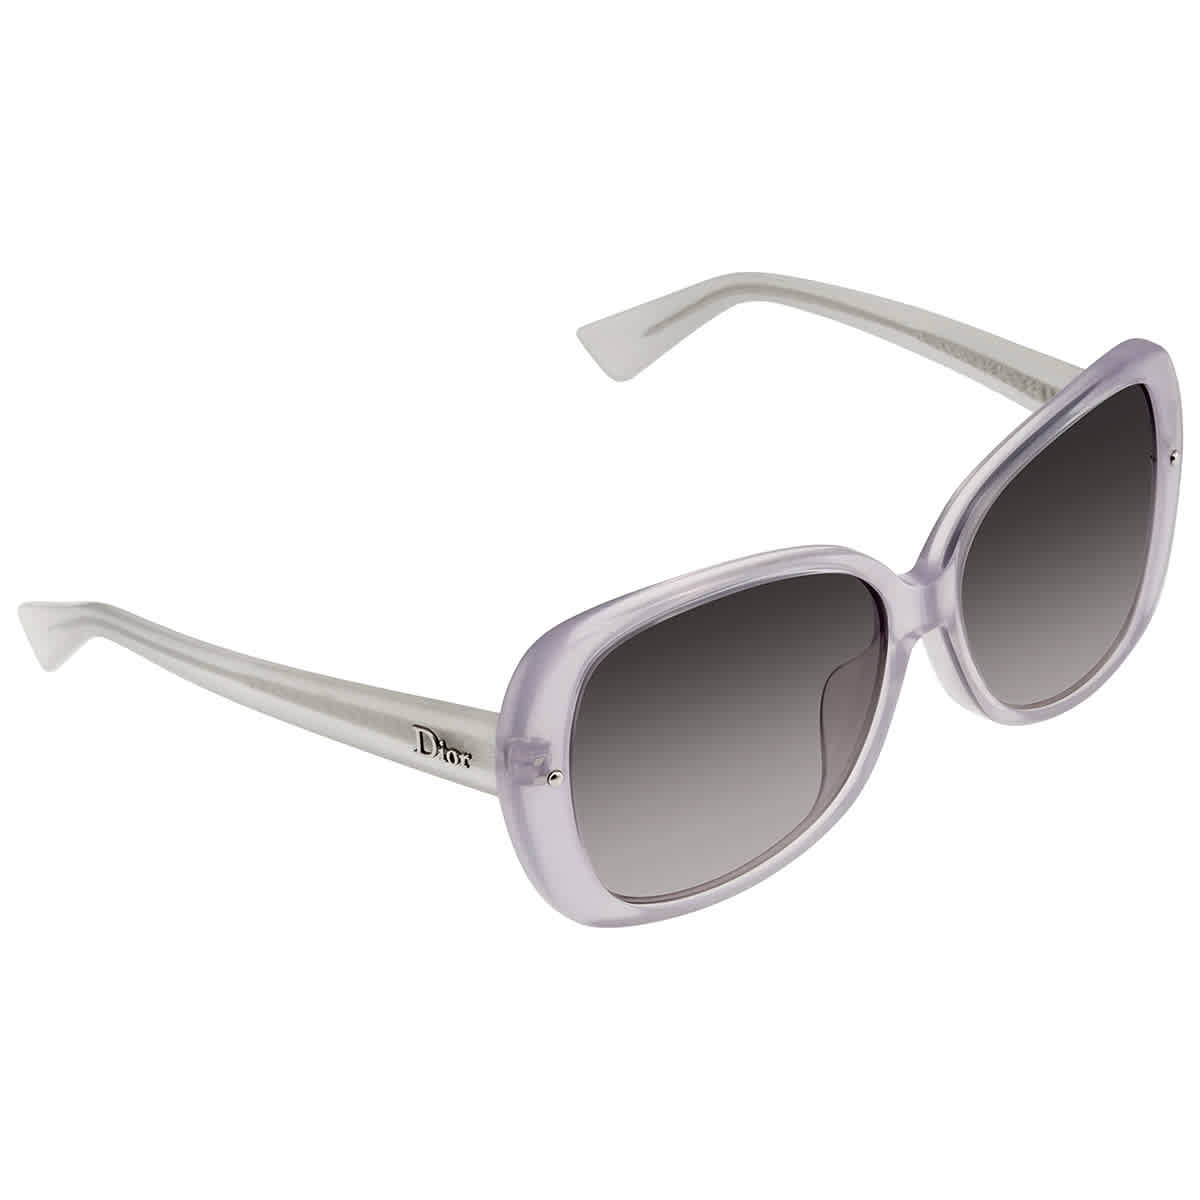 Dior Grey Gradient Oversized Sunglasses Jupon1f 3ki 59